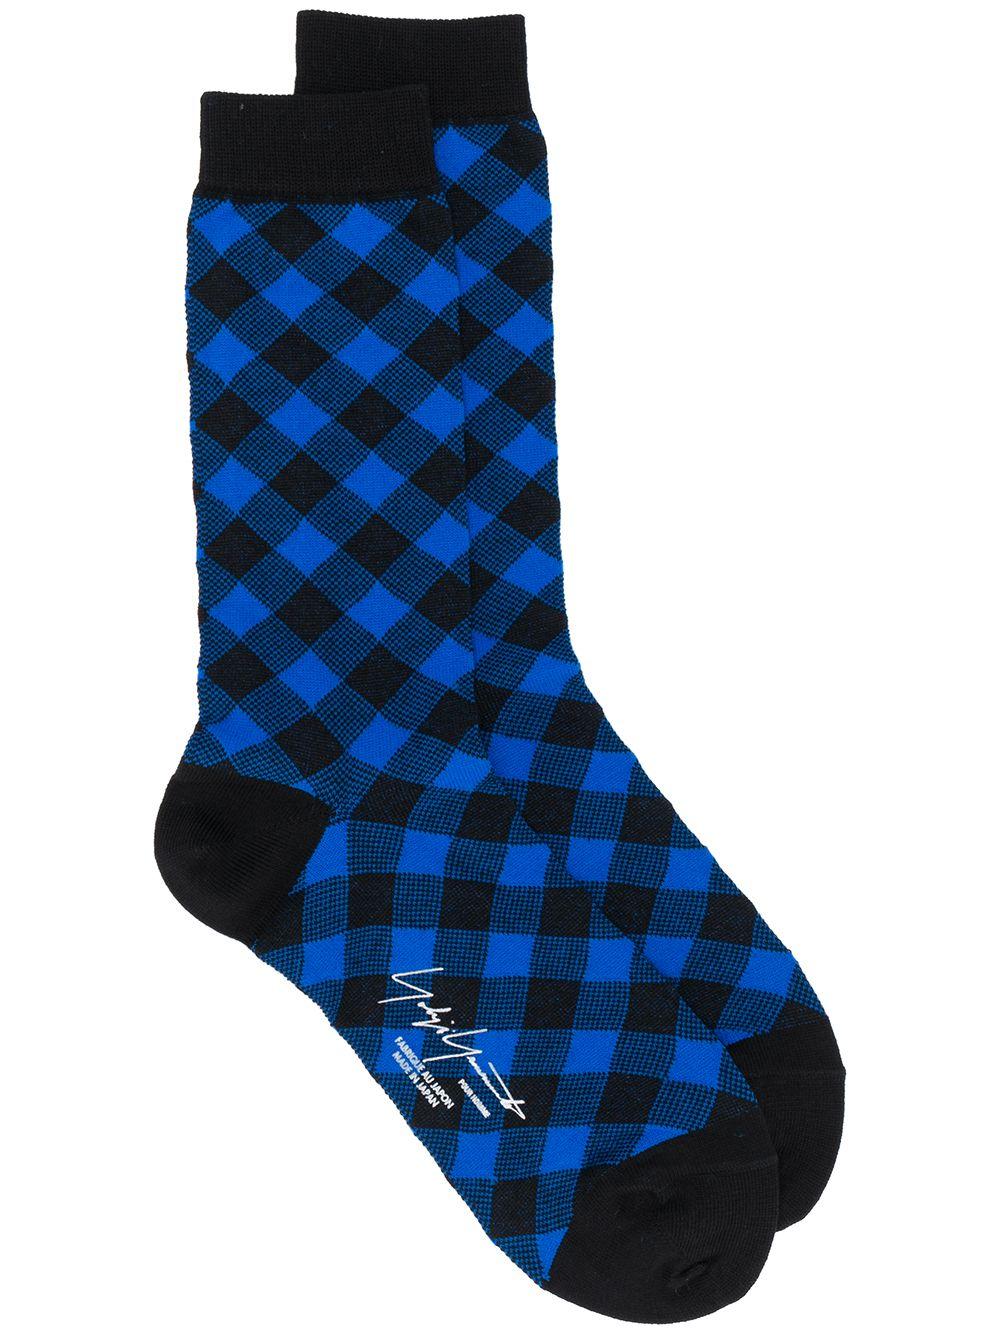 Yohji Yamamoto Cotton Check Logo Print Socks in Blue for Men - Lyst